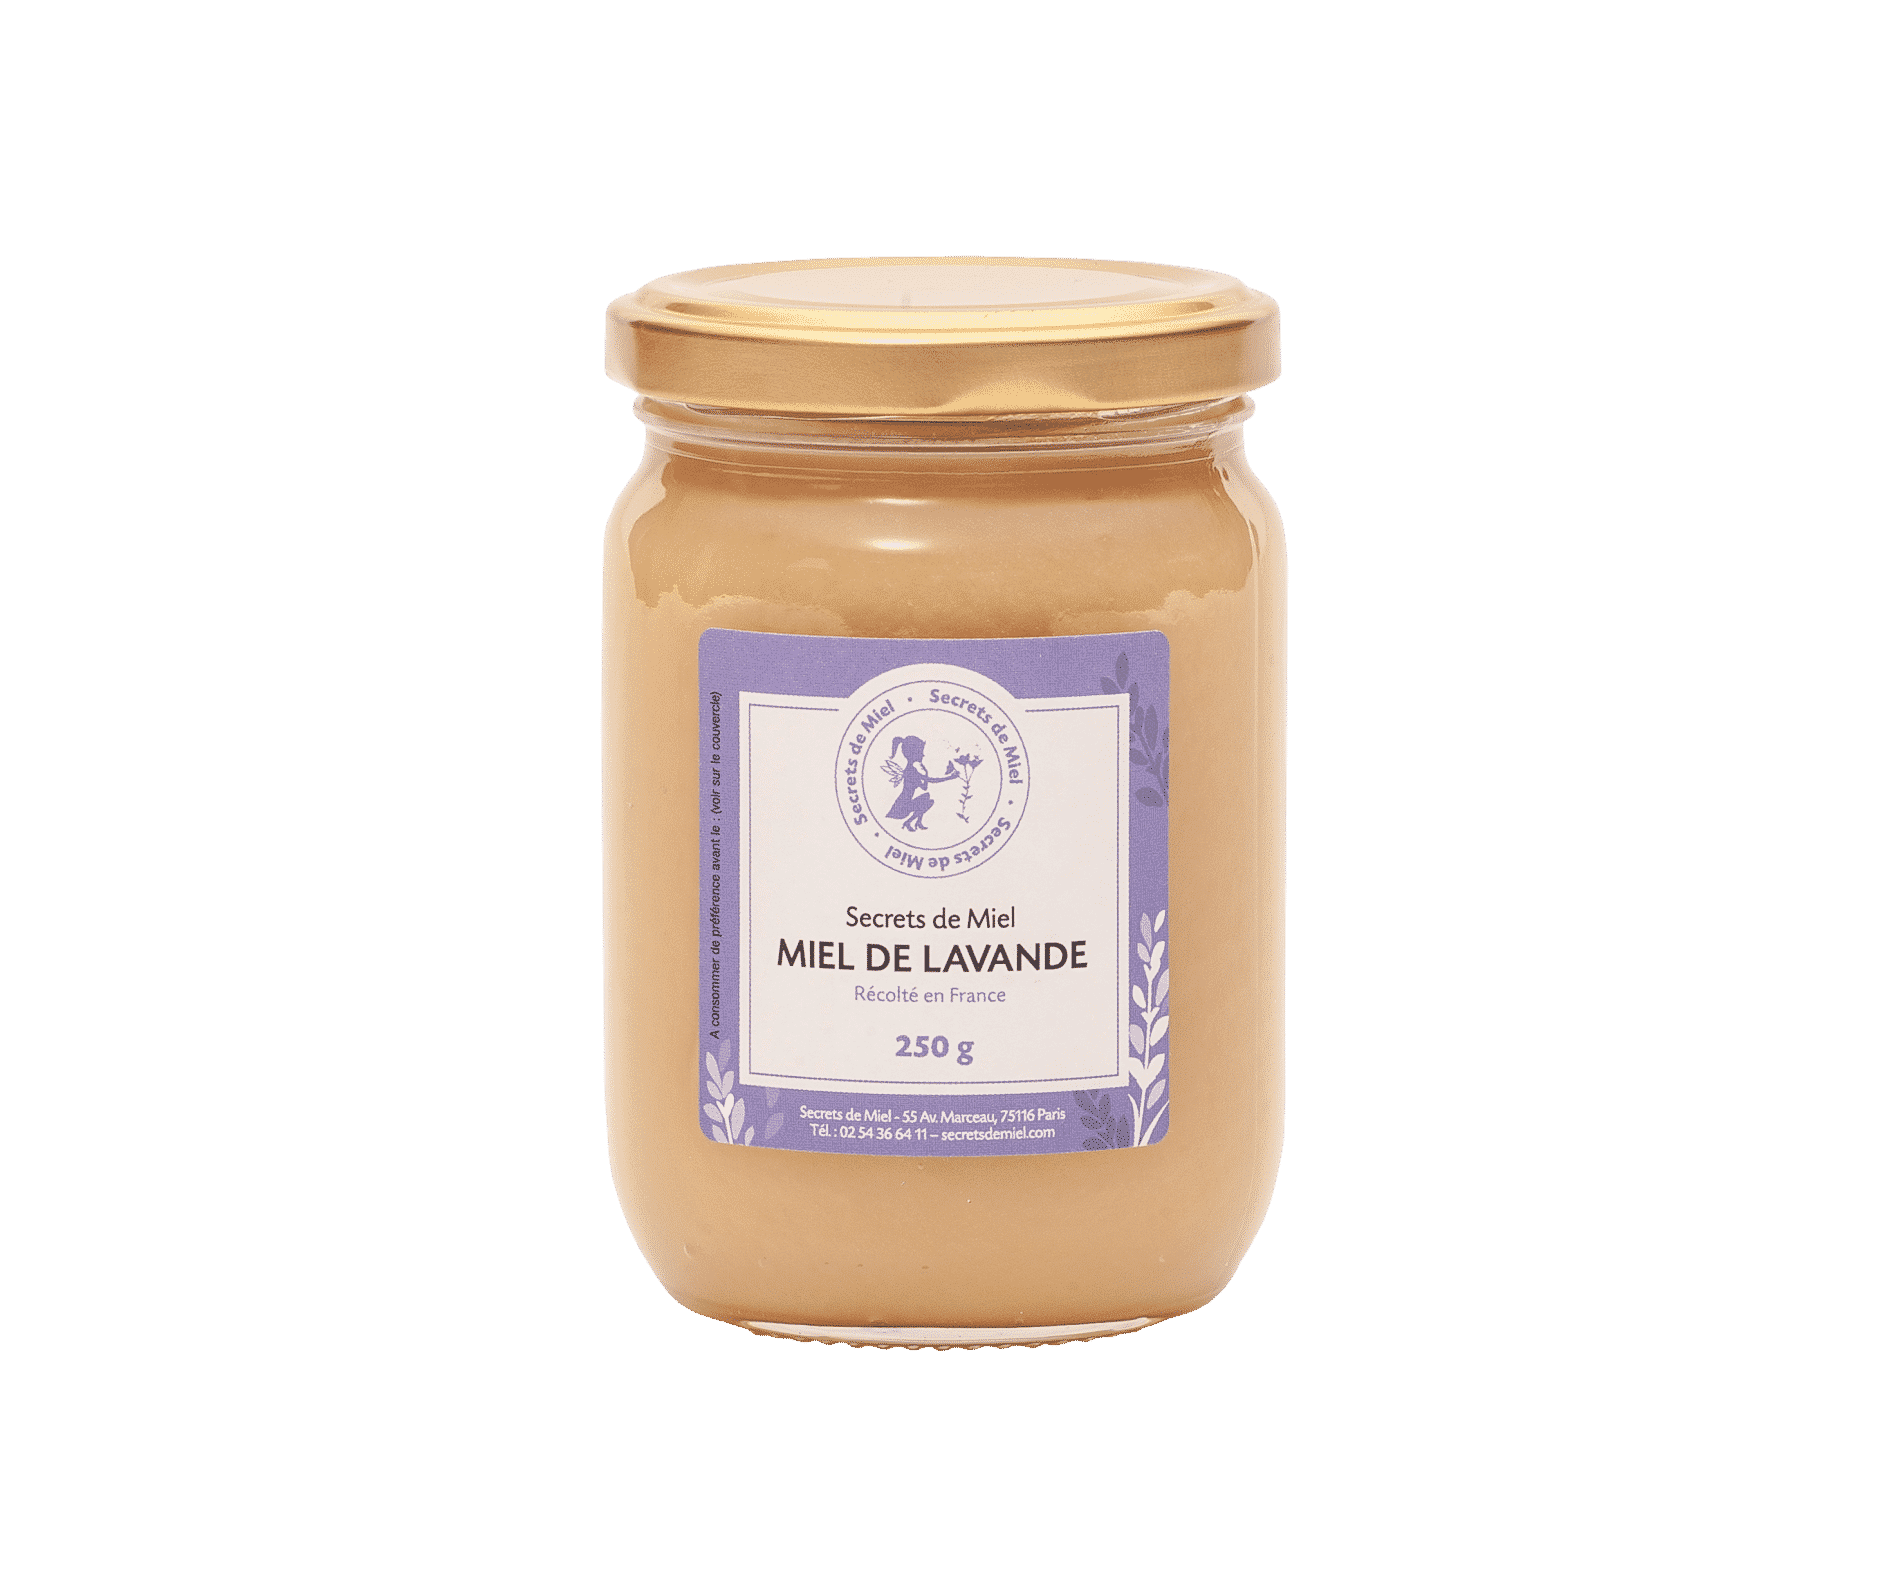 miel de lavande français - Secrets de Miel